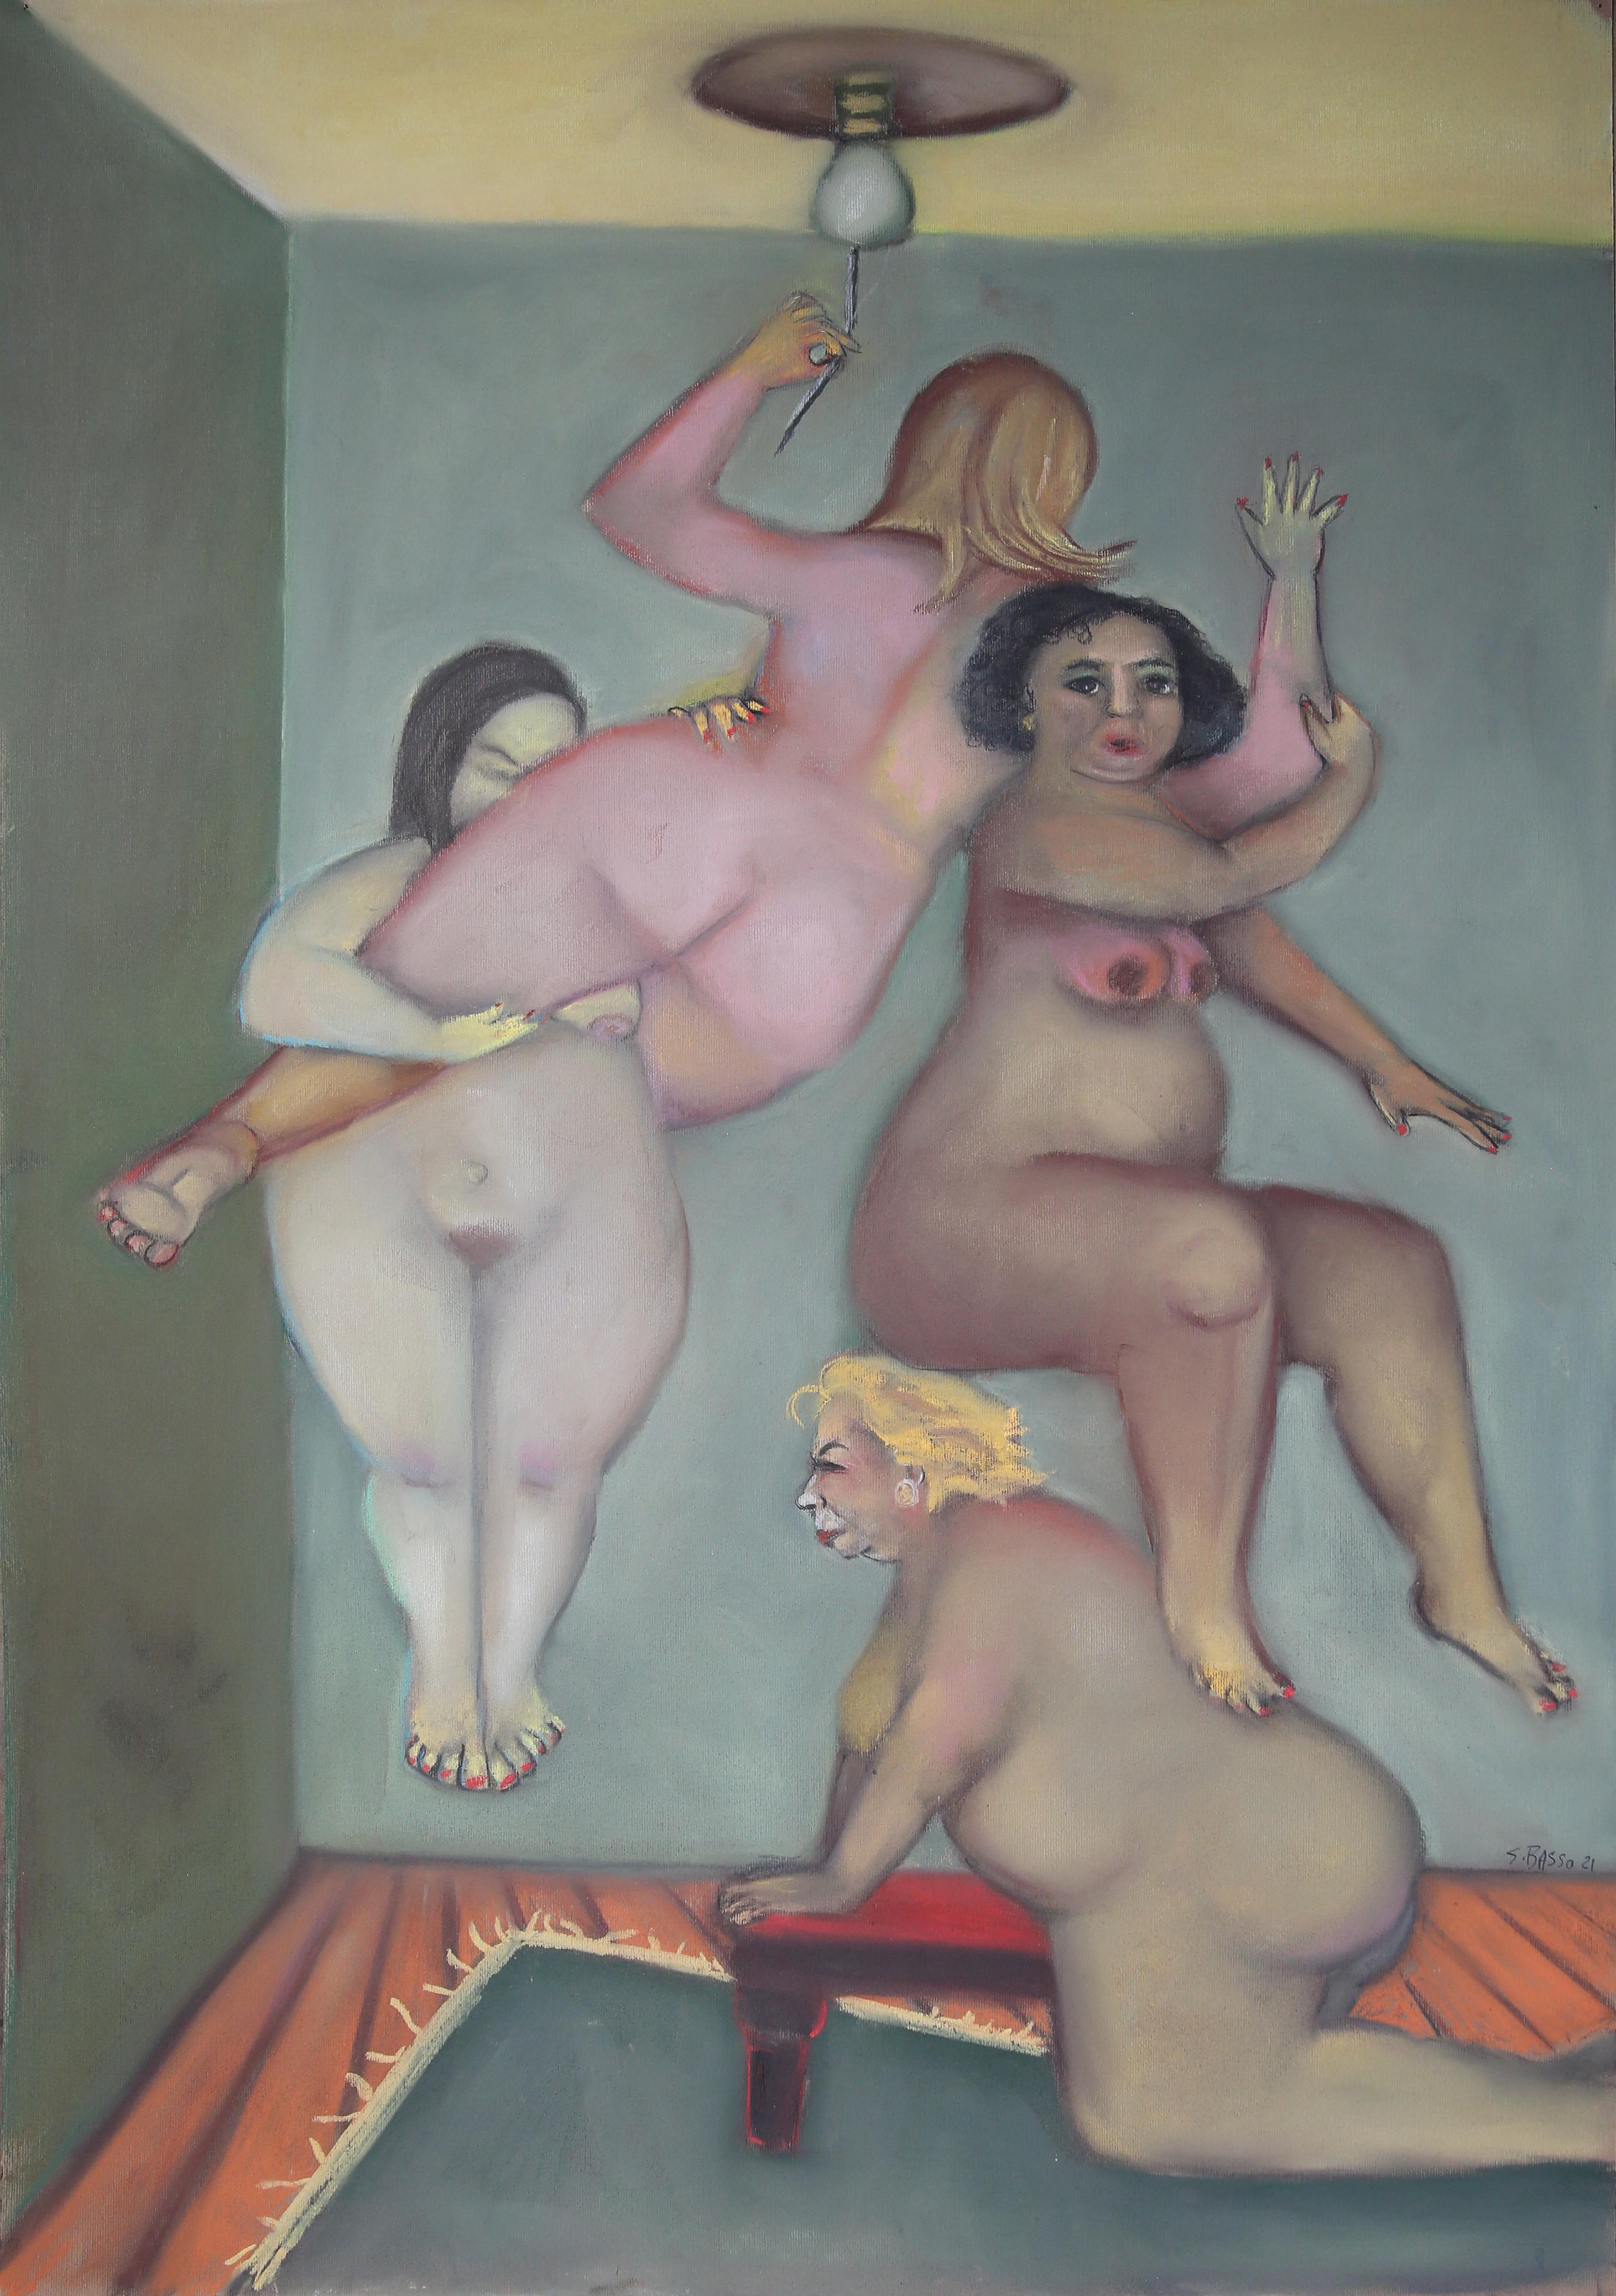 Energy Saving  Nudes multiple female Nude figures humorous overtones soft colors - Art by Stephen Basso